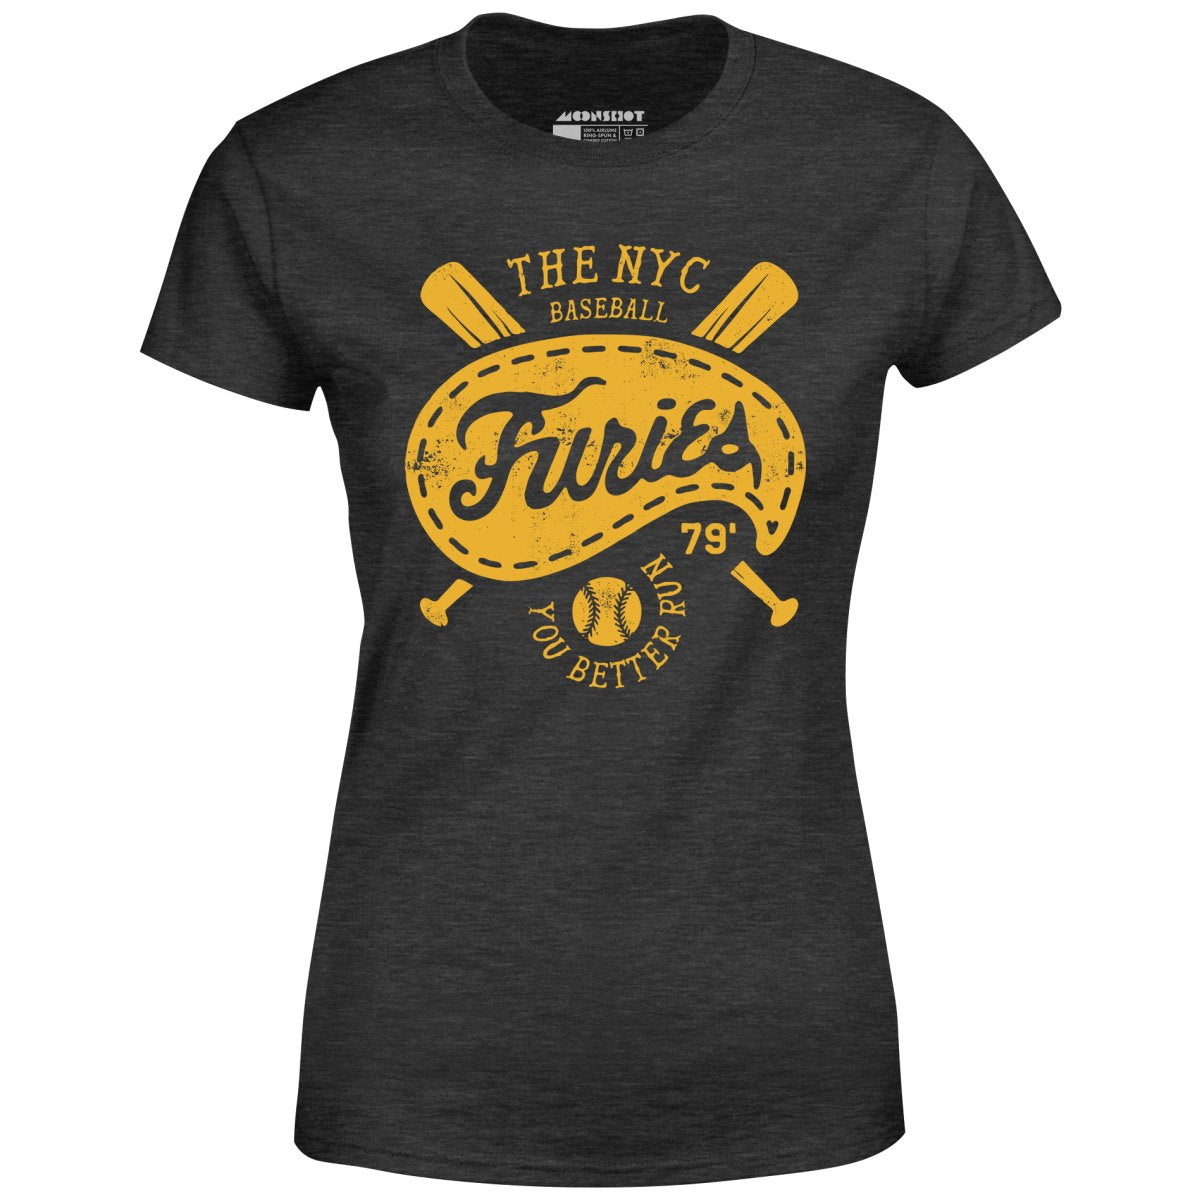 The Baseball Furies - Women's T-Shirt